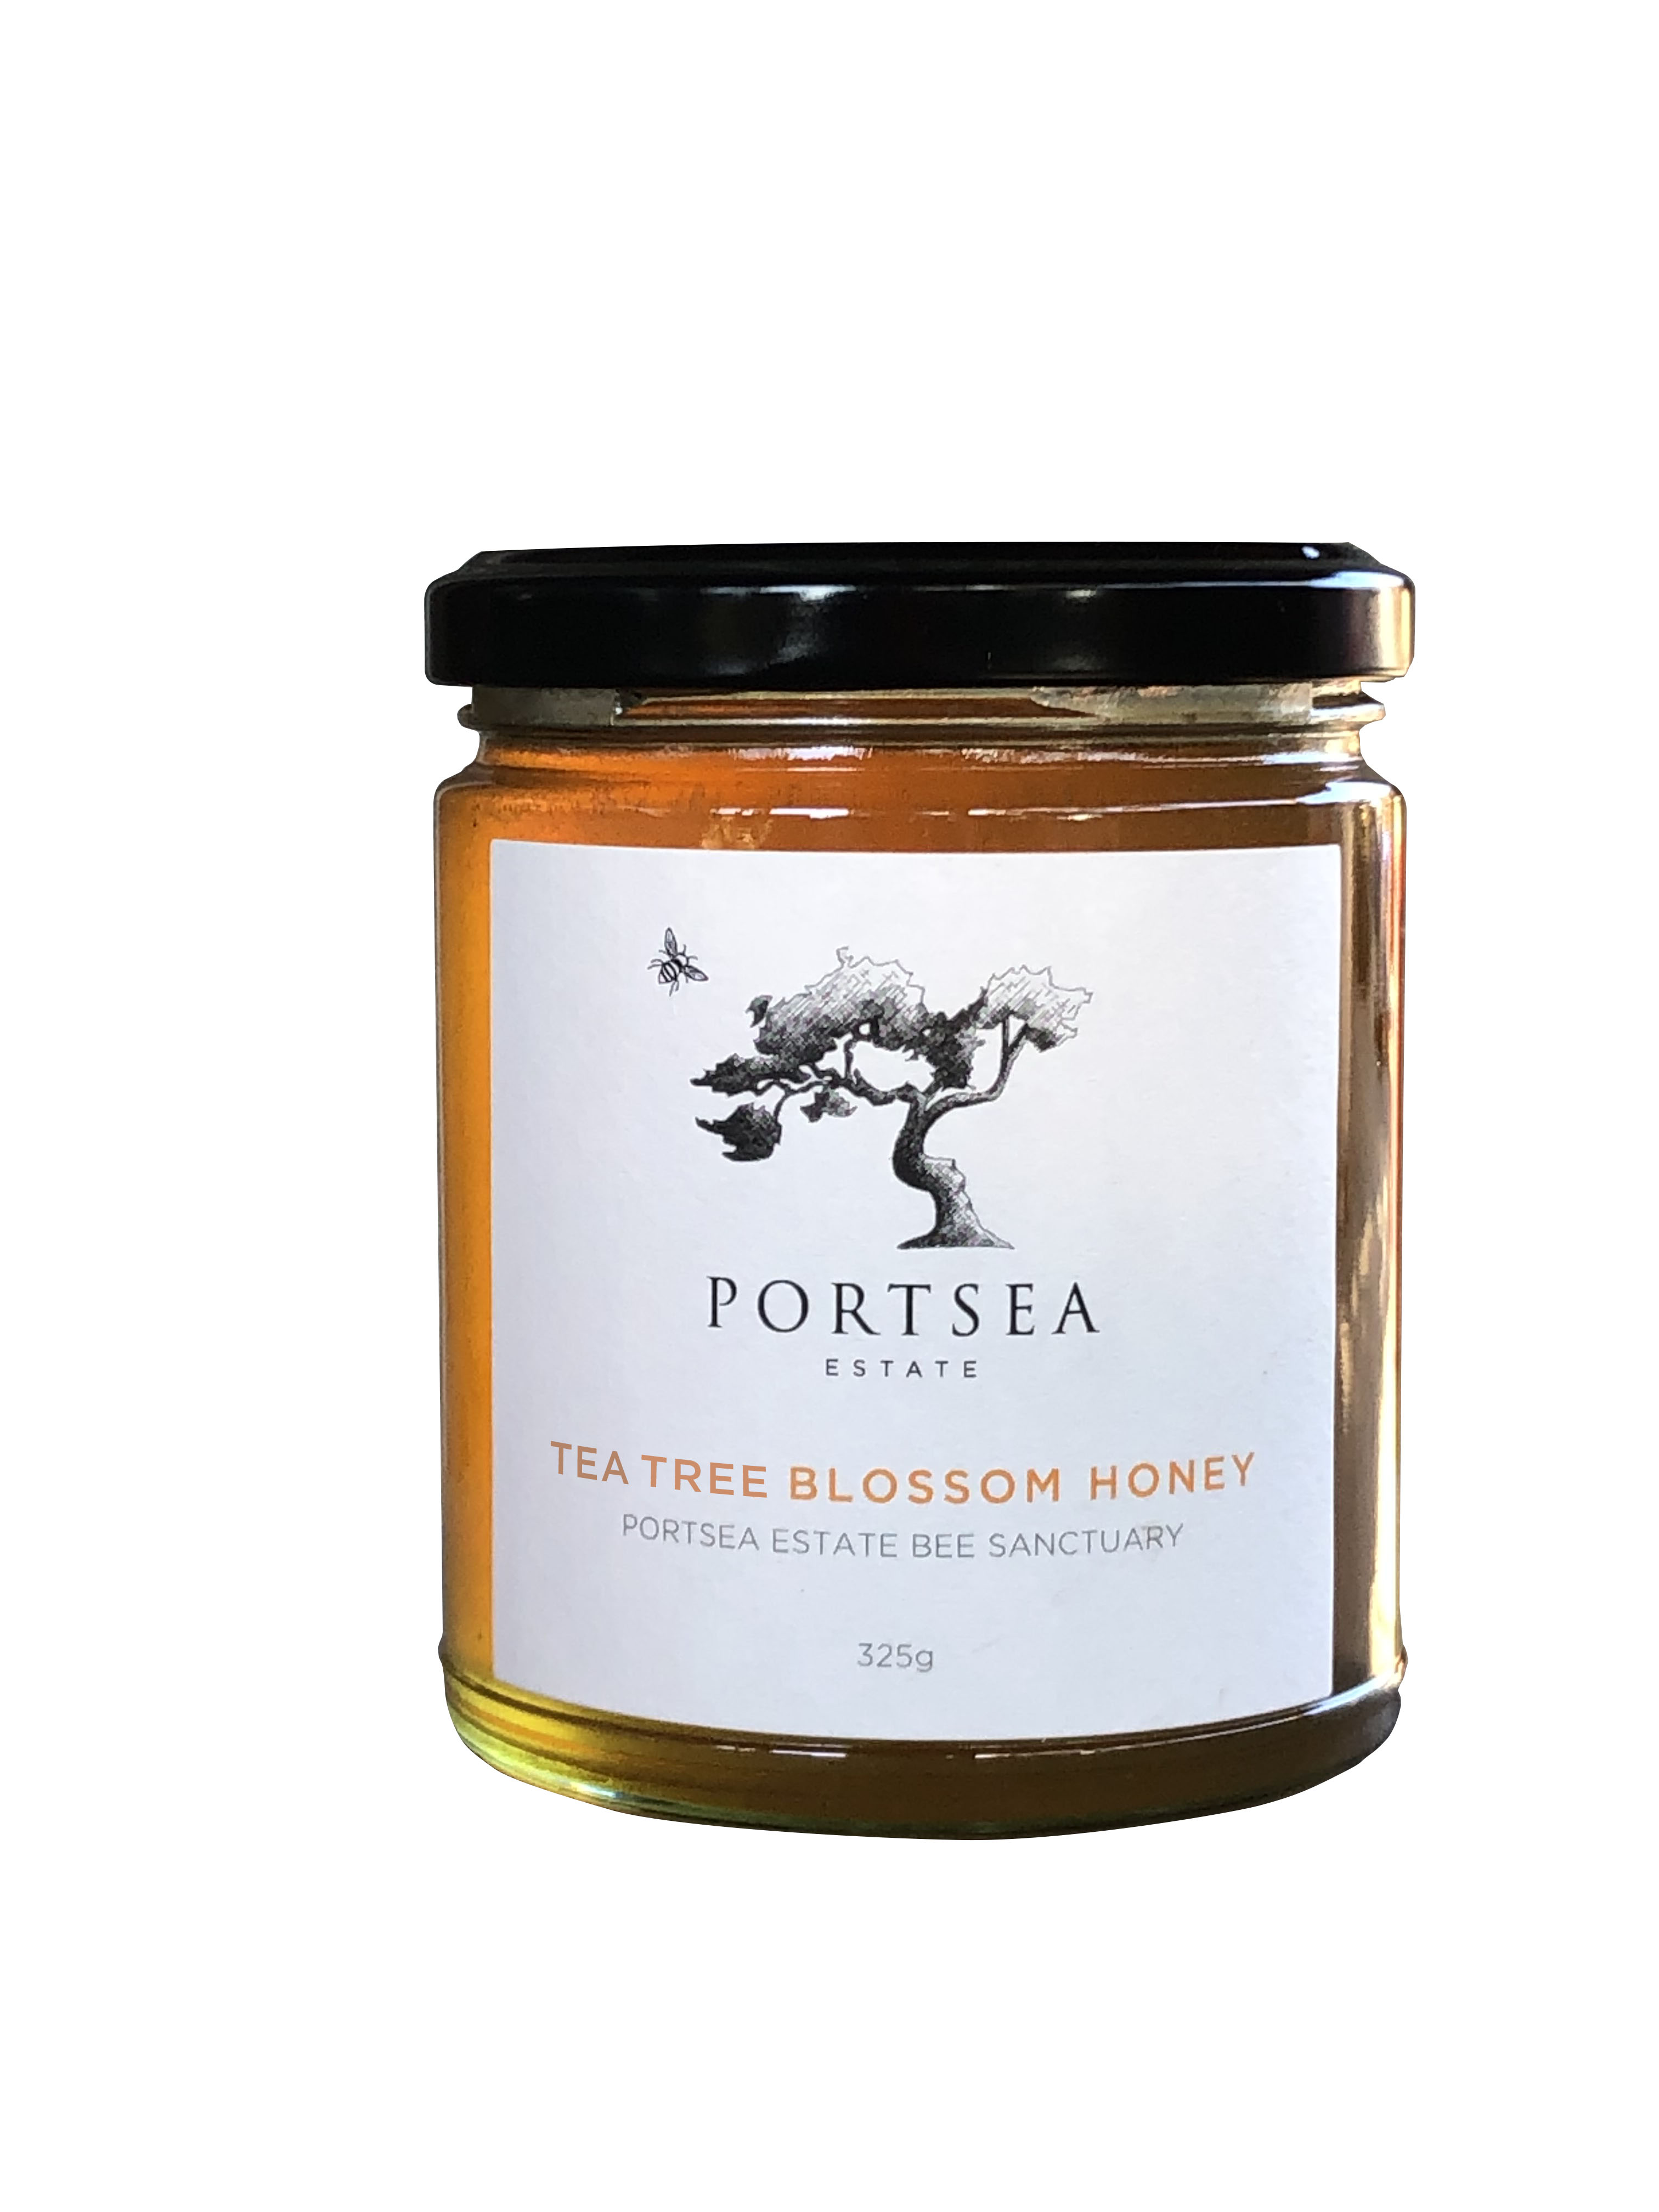 Portsea Estate Tea Tree Blossom Honey